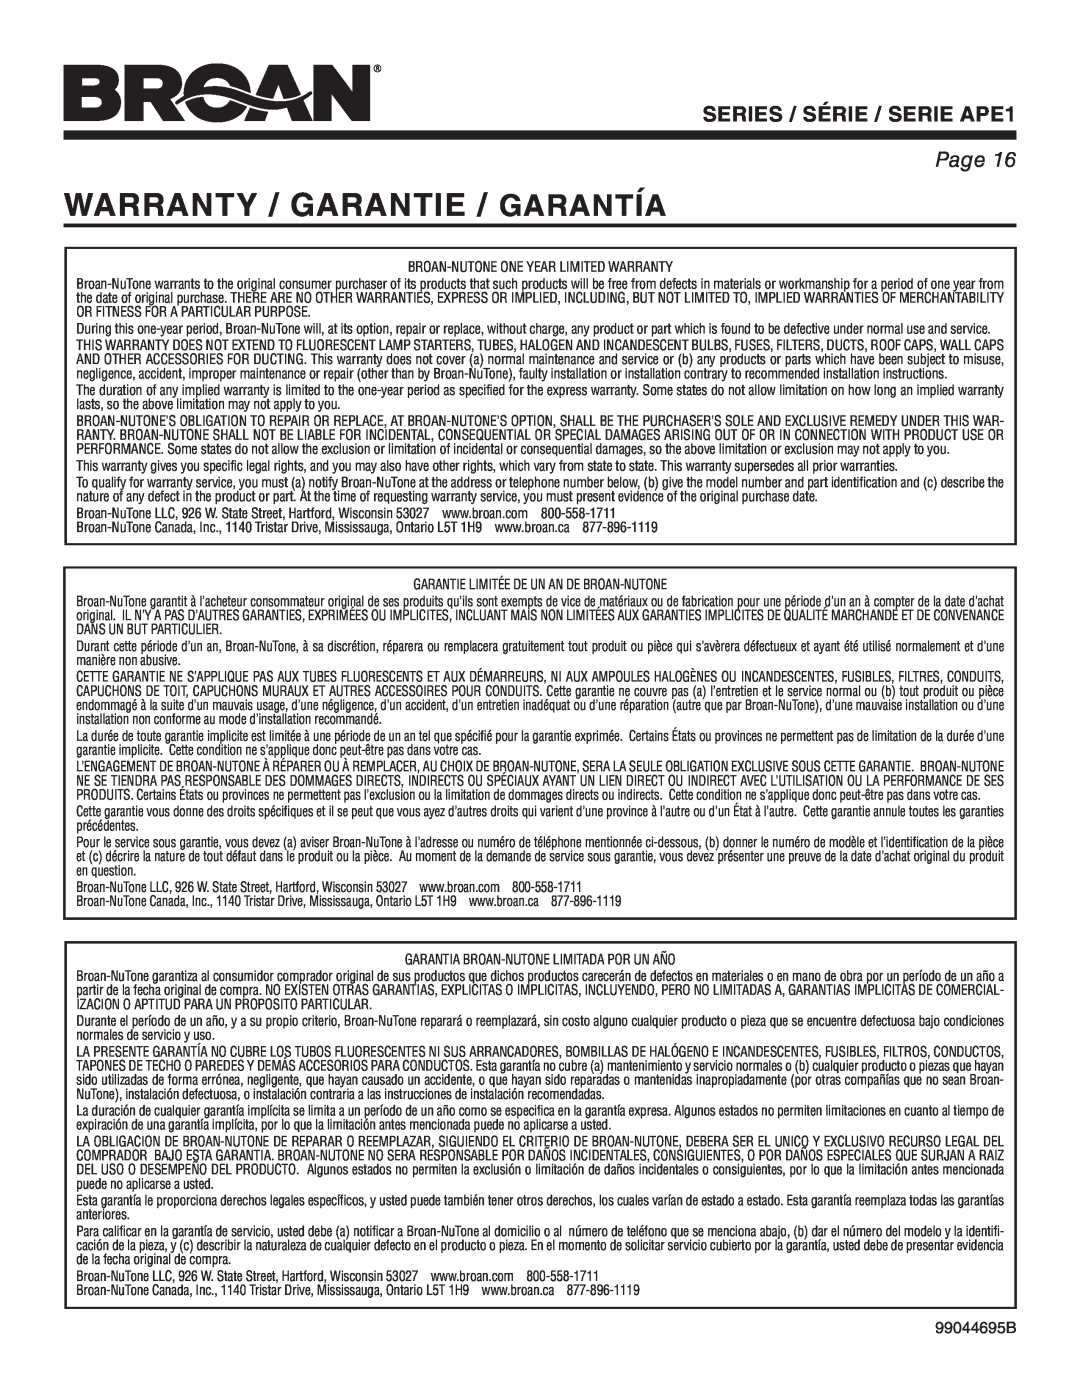 Broan warranty Warranty / Garantie / Garantía, SERIES / SÉRIE / SERIE APE1, Page 